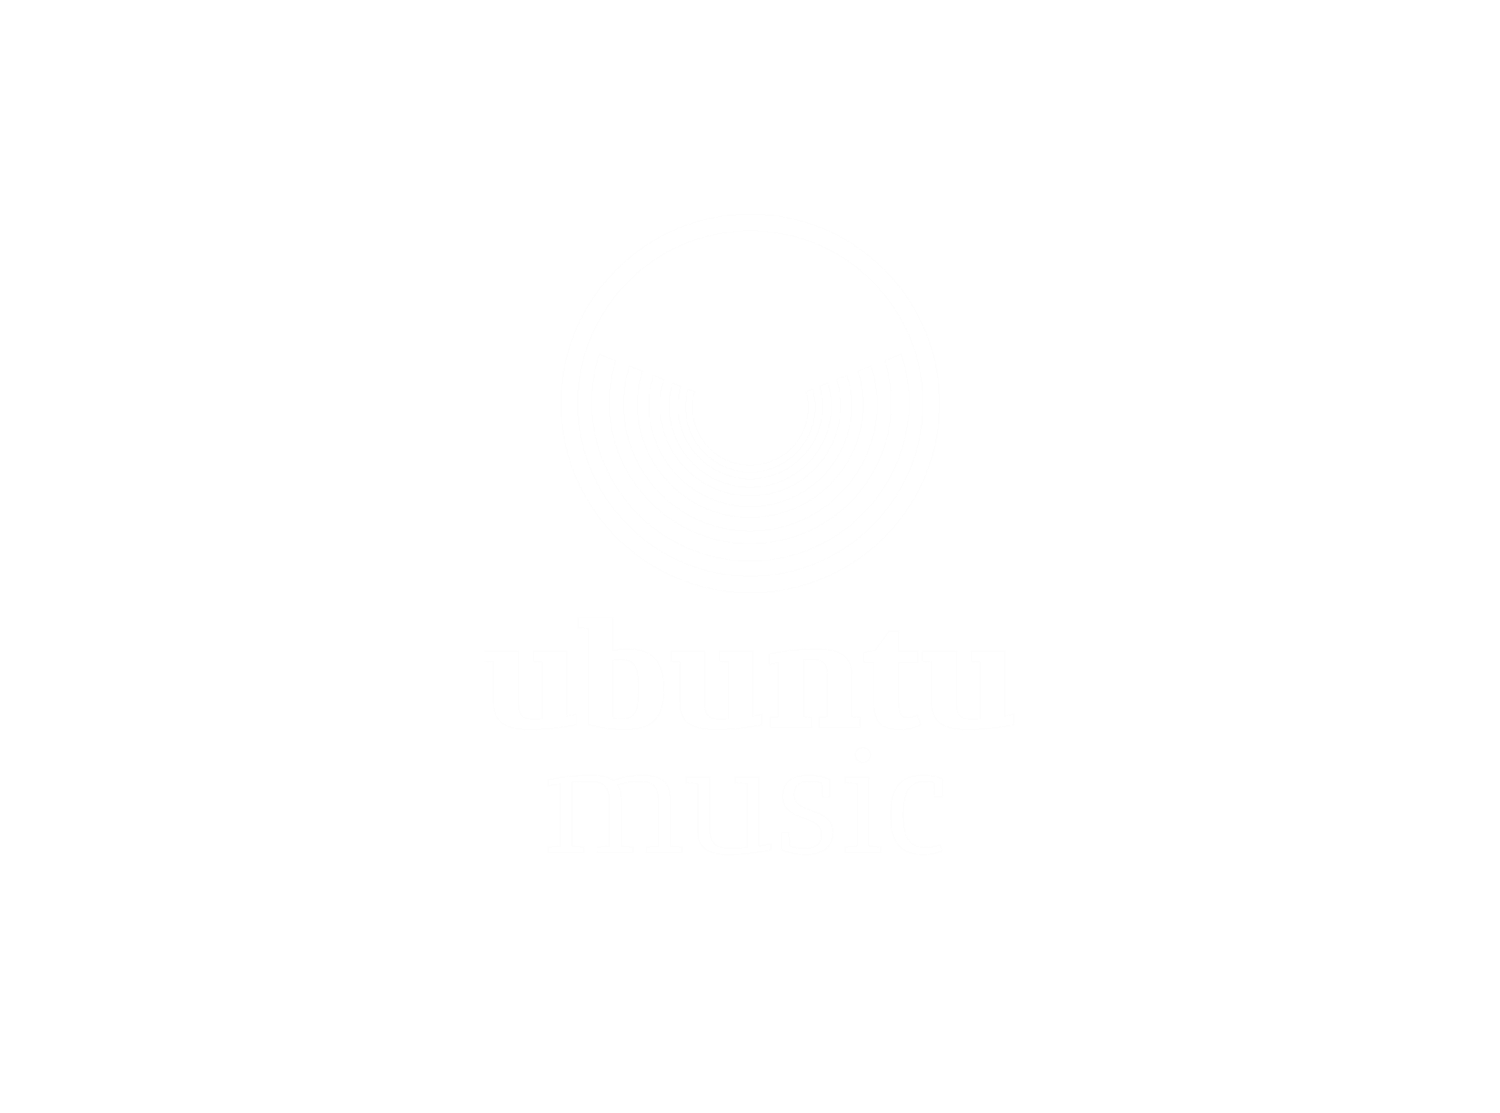 ubuntu music